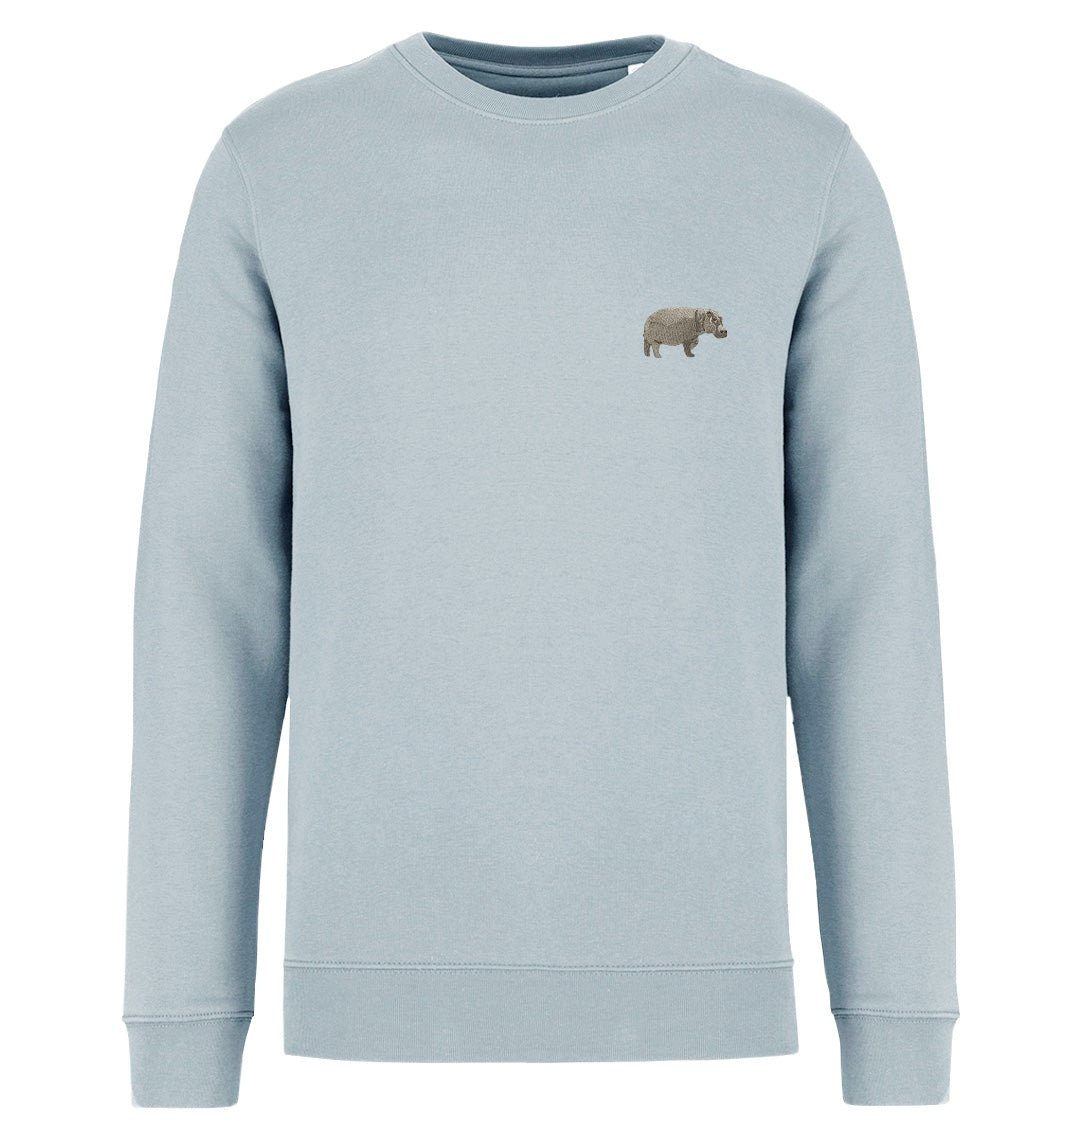 Hippo Mens Sweatshirt - Blue Panda